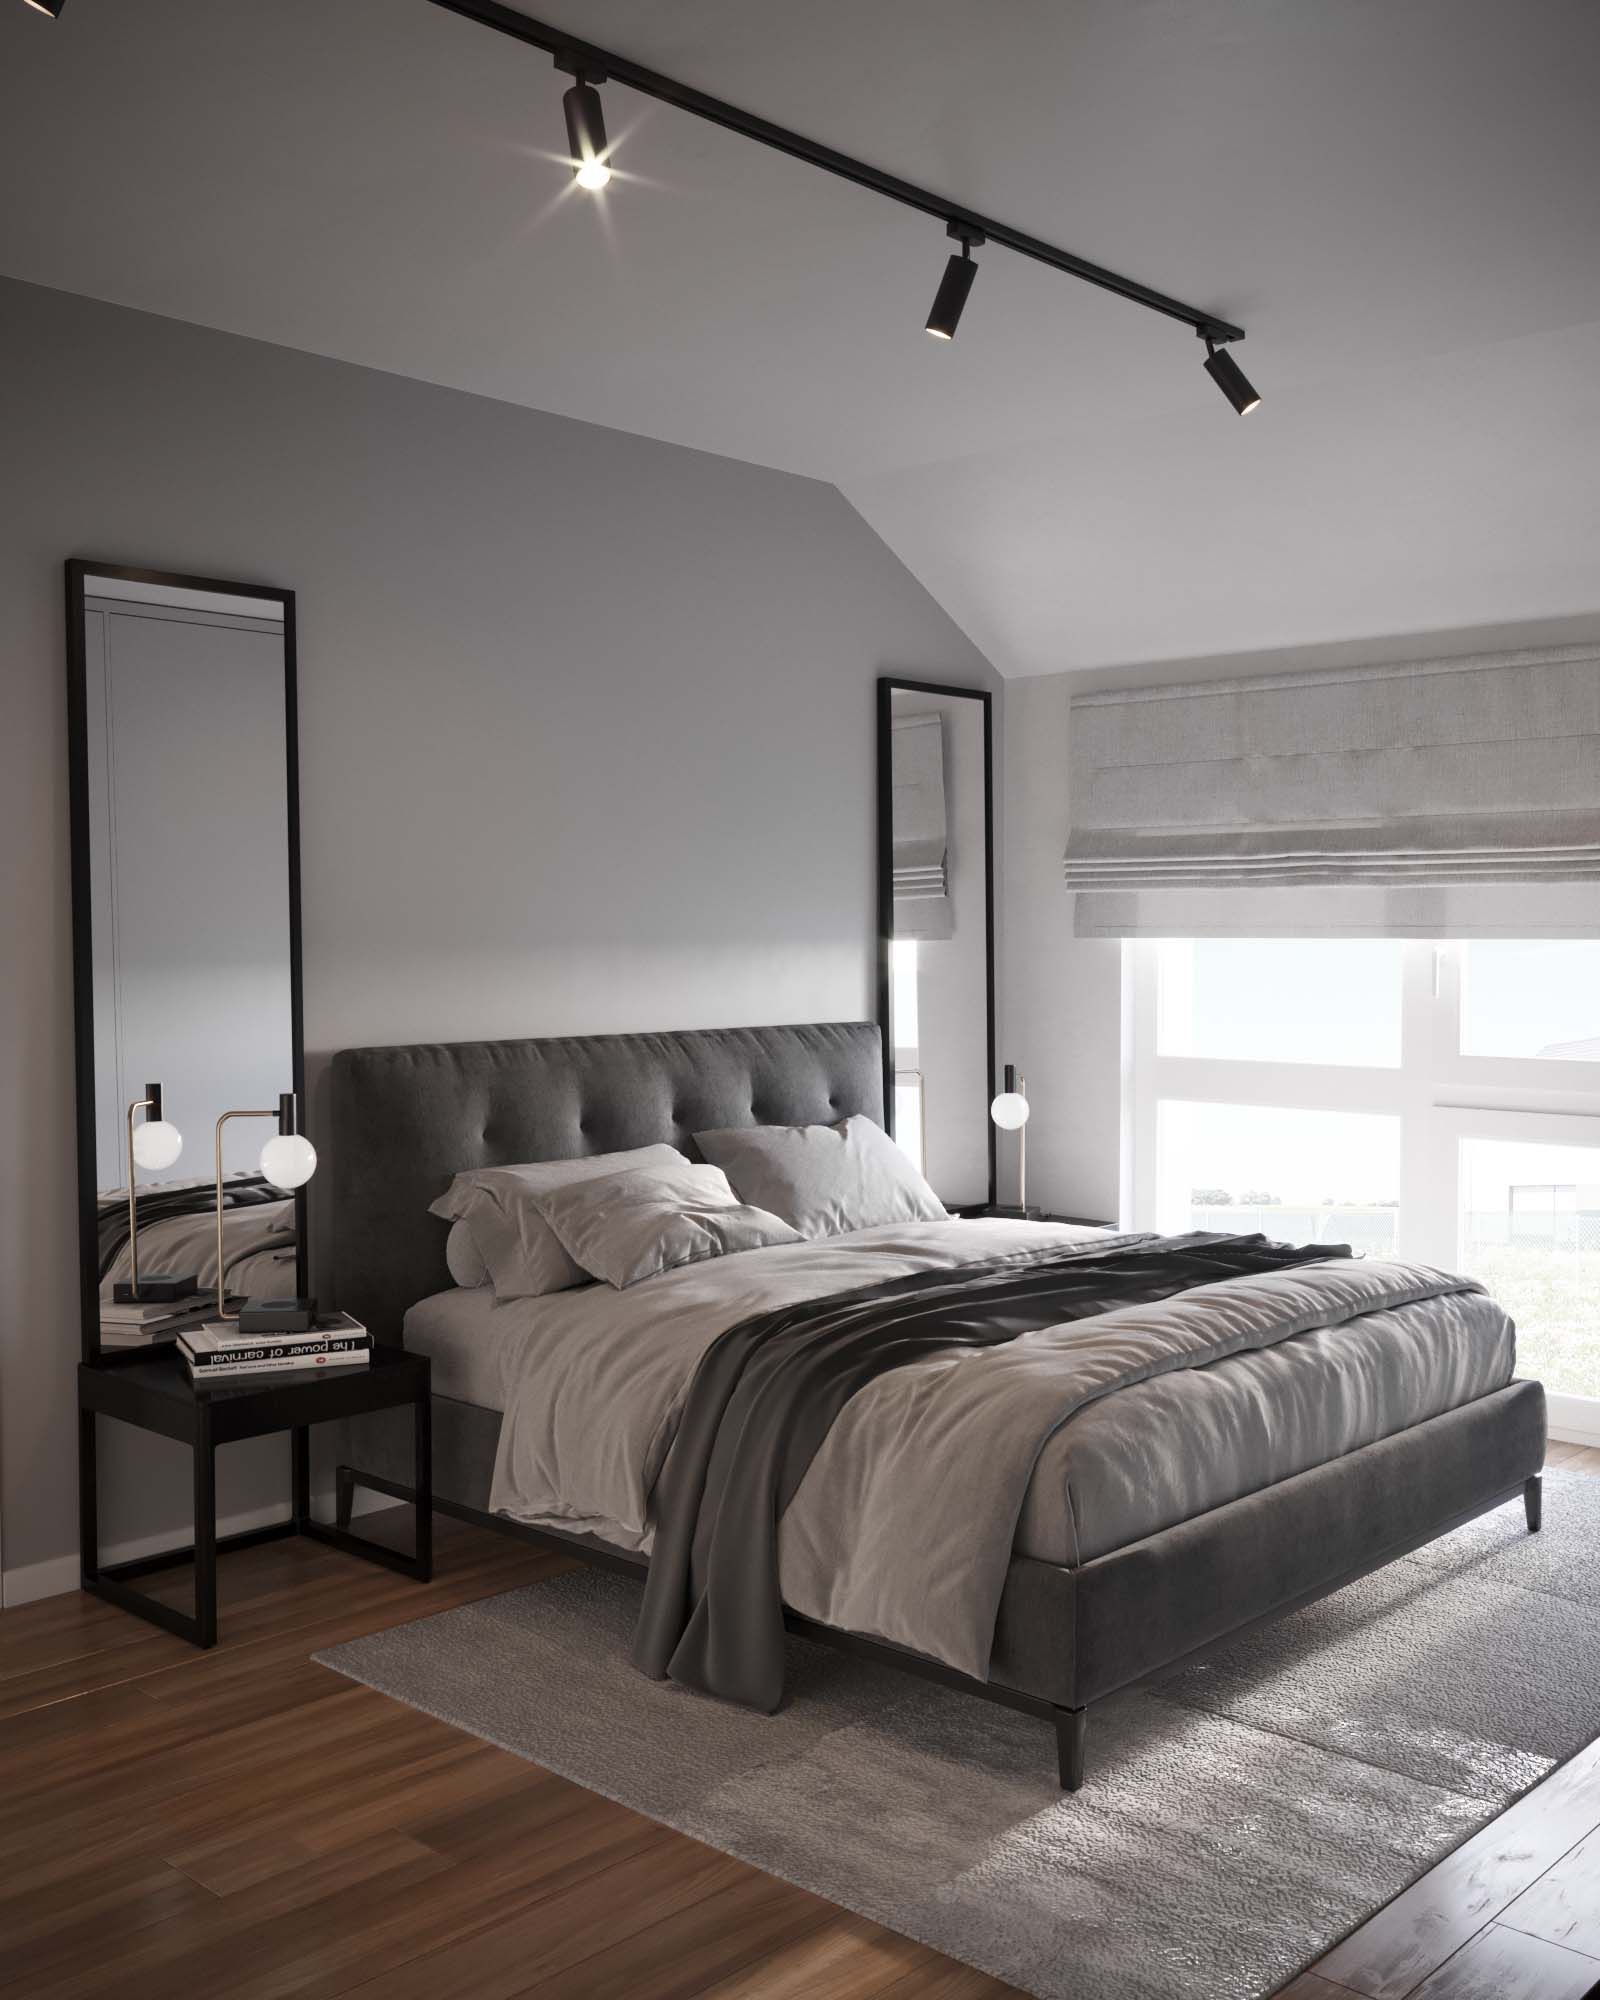 Grey Bedroom Furniture